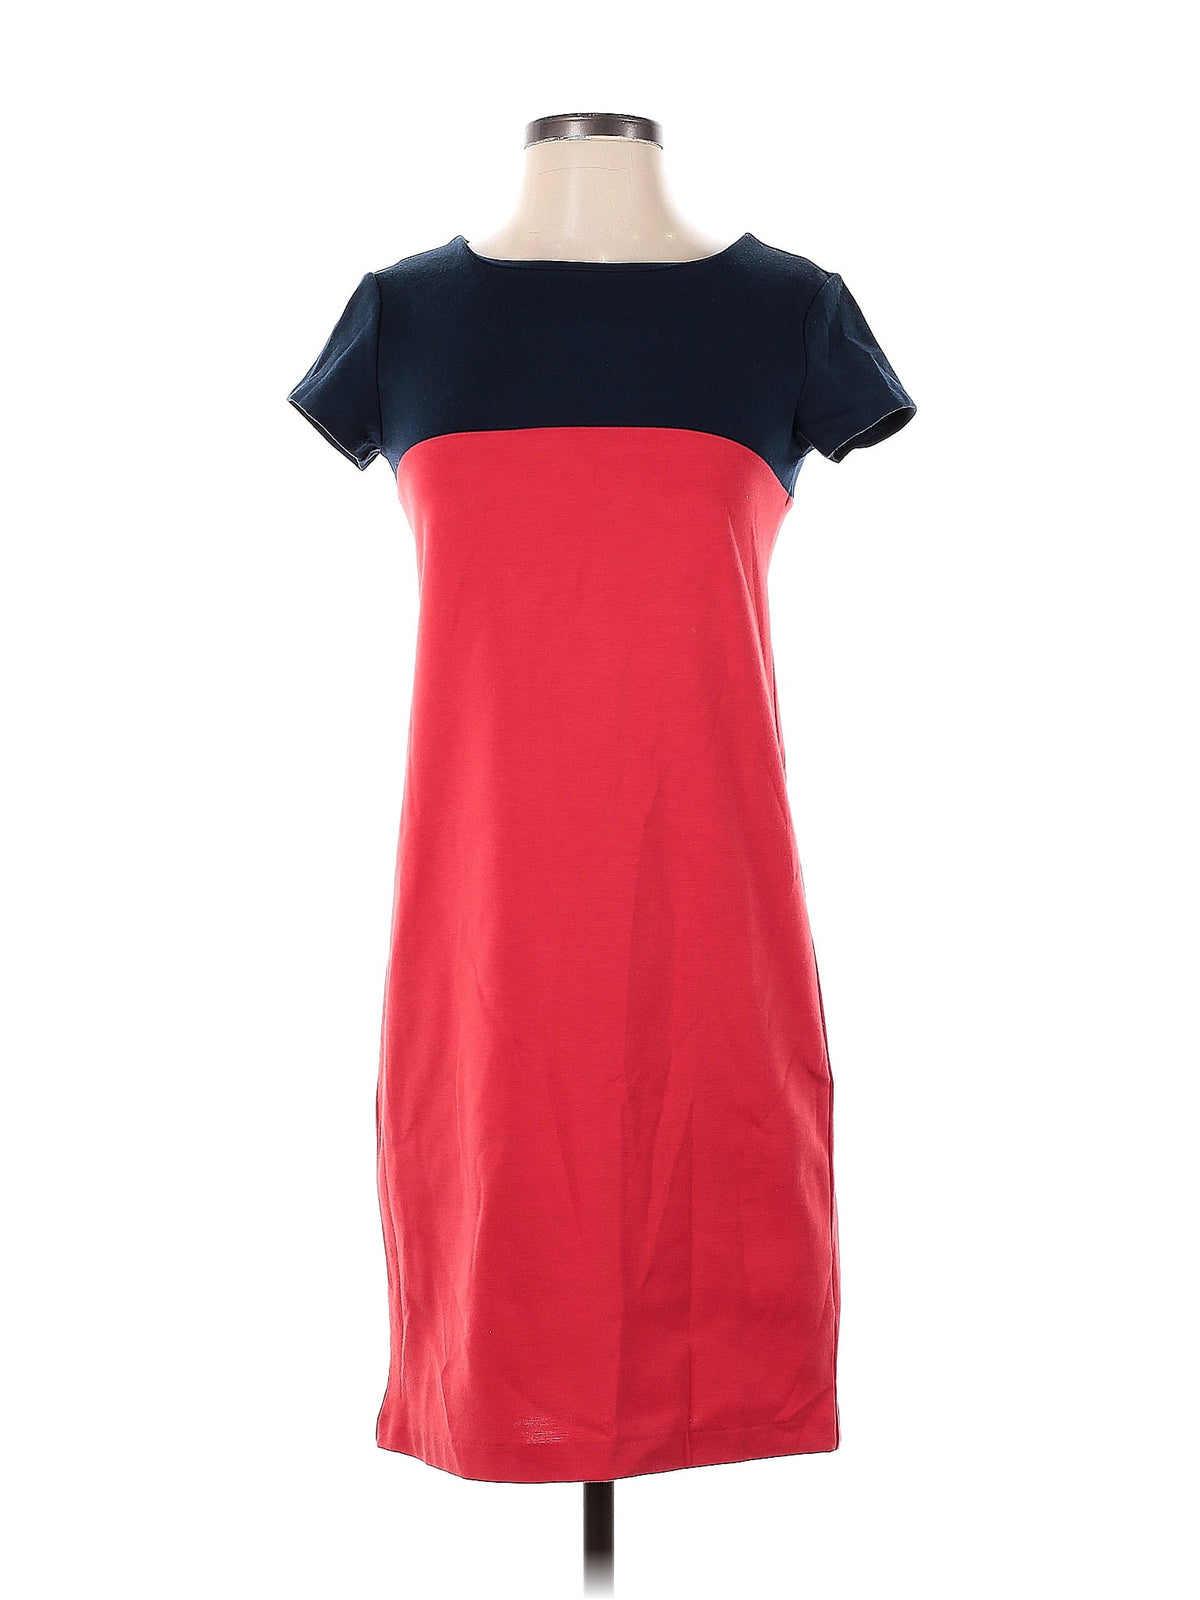 Casual Dress size - XS